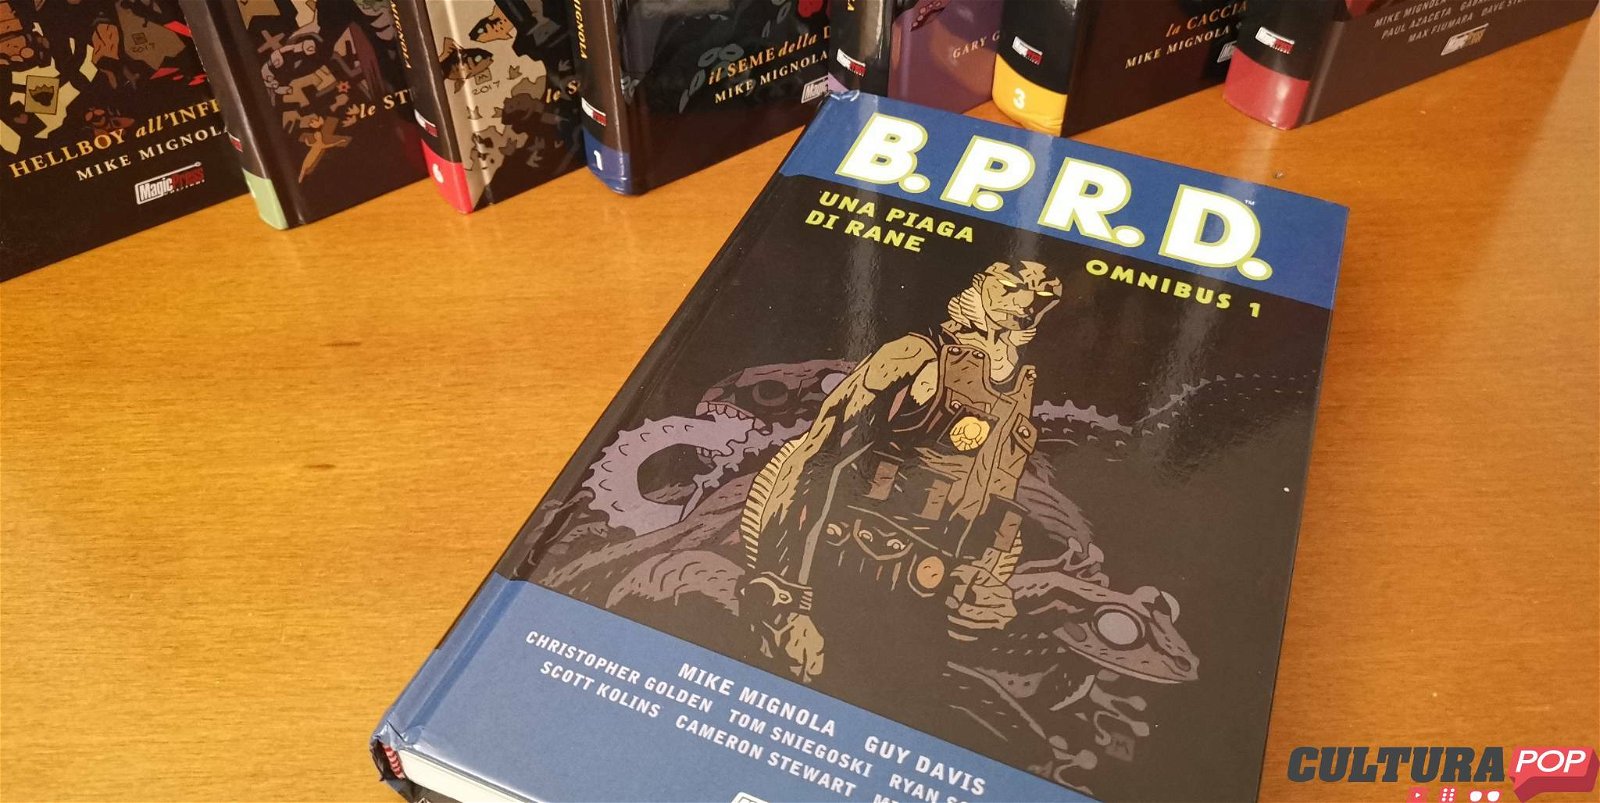 Immagine di B.P.R.D. Omnibus vol. 1 - Una piaga di rane, recensione